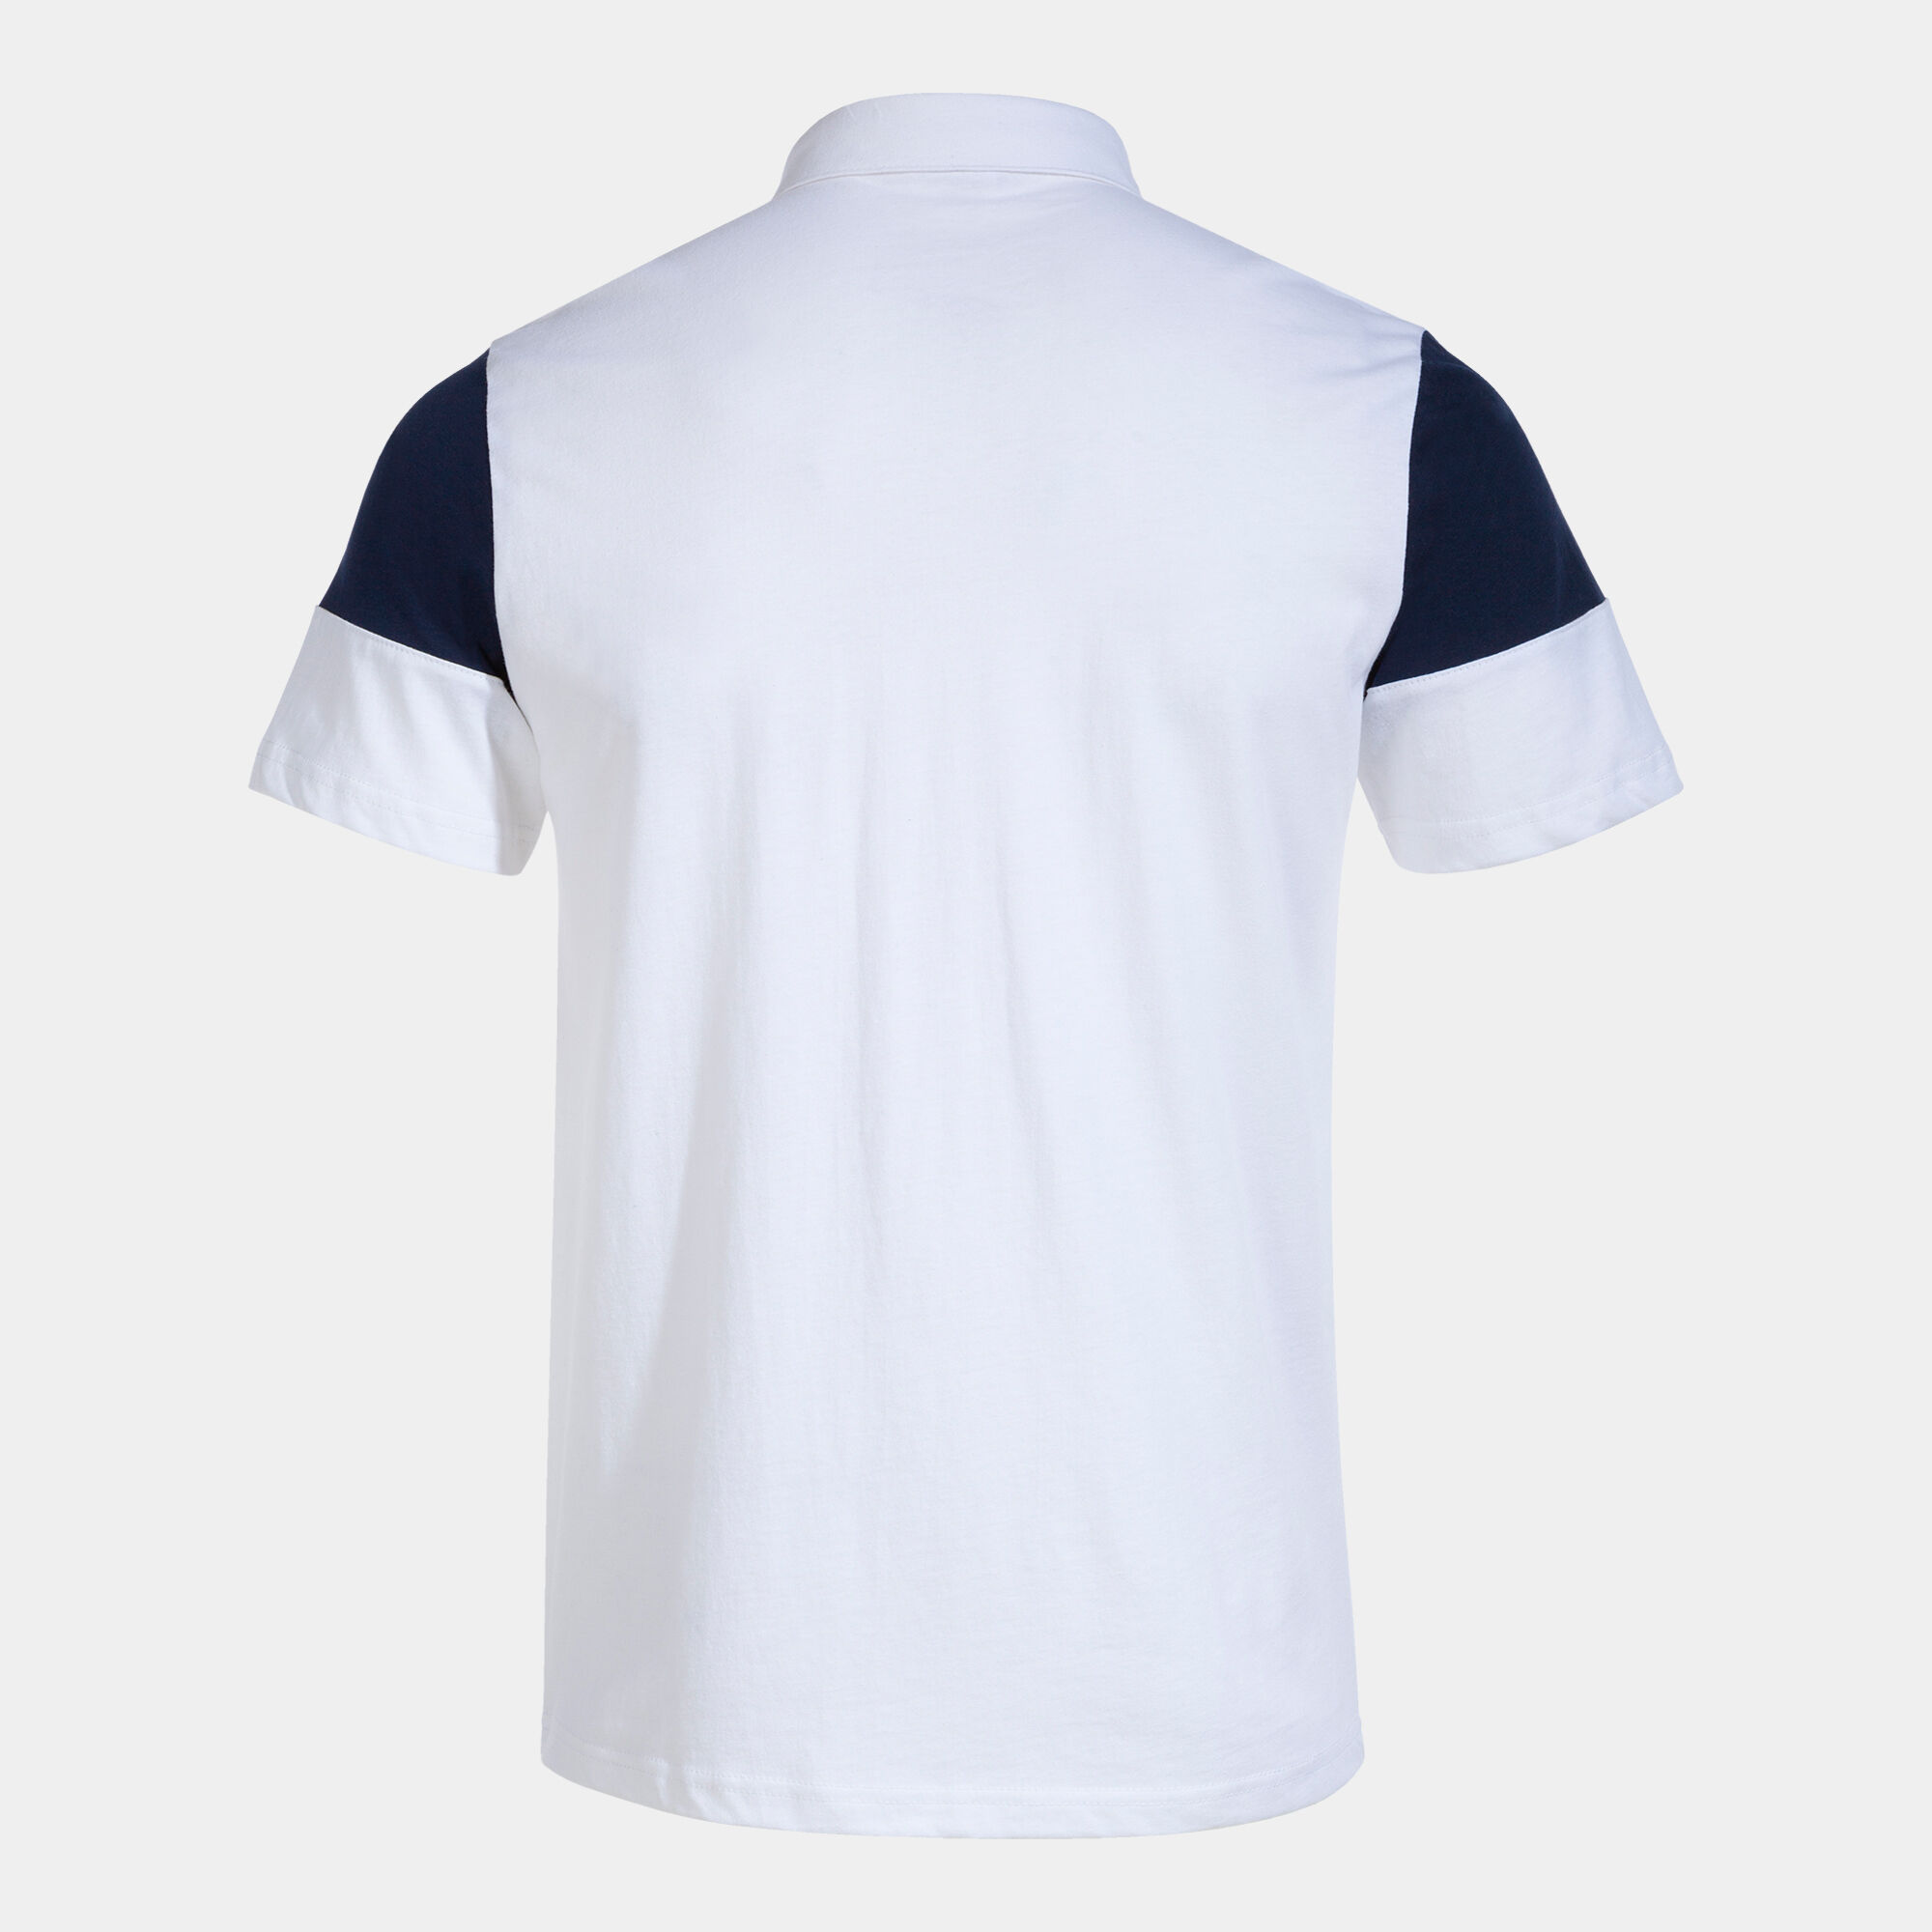 Polo shirt short-sleeve man Crew V white navy blue